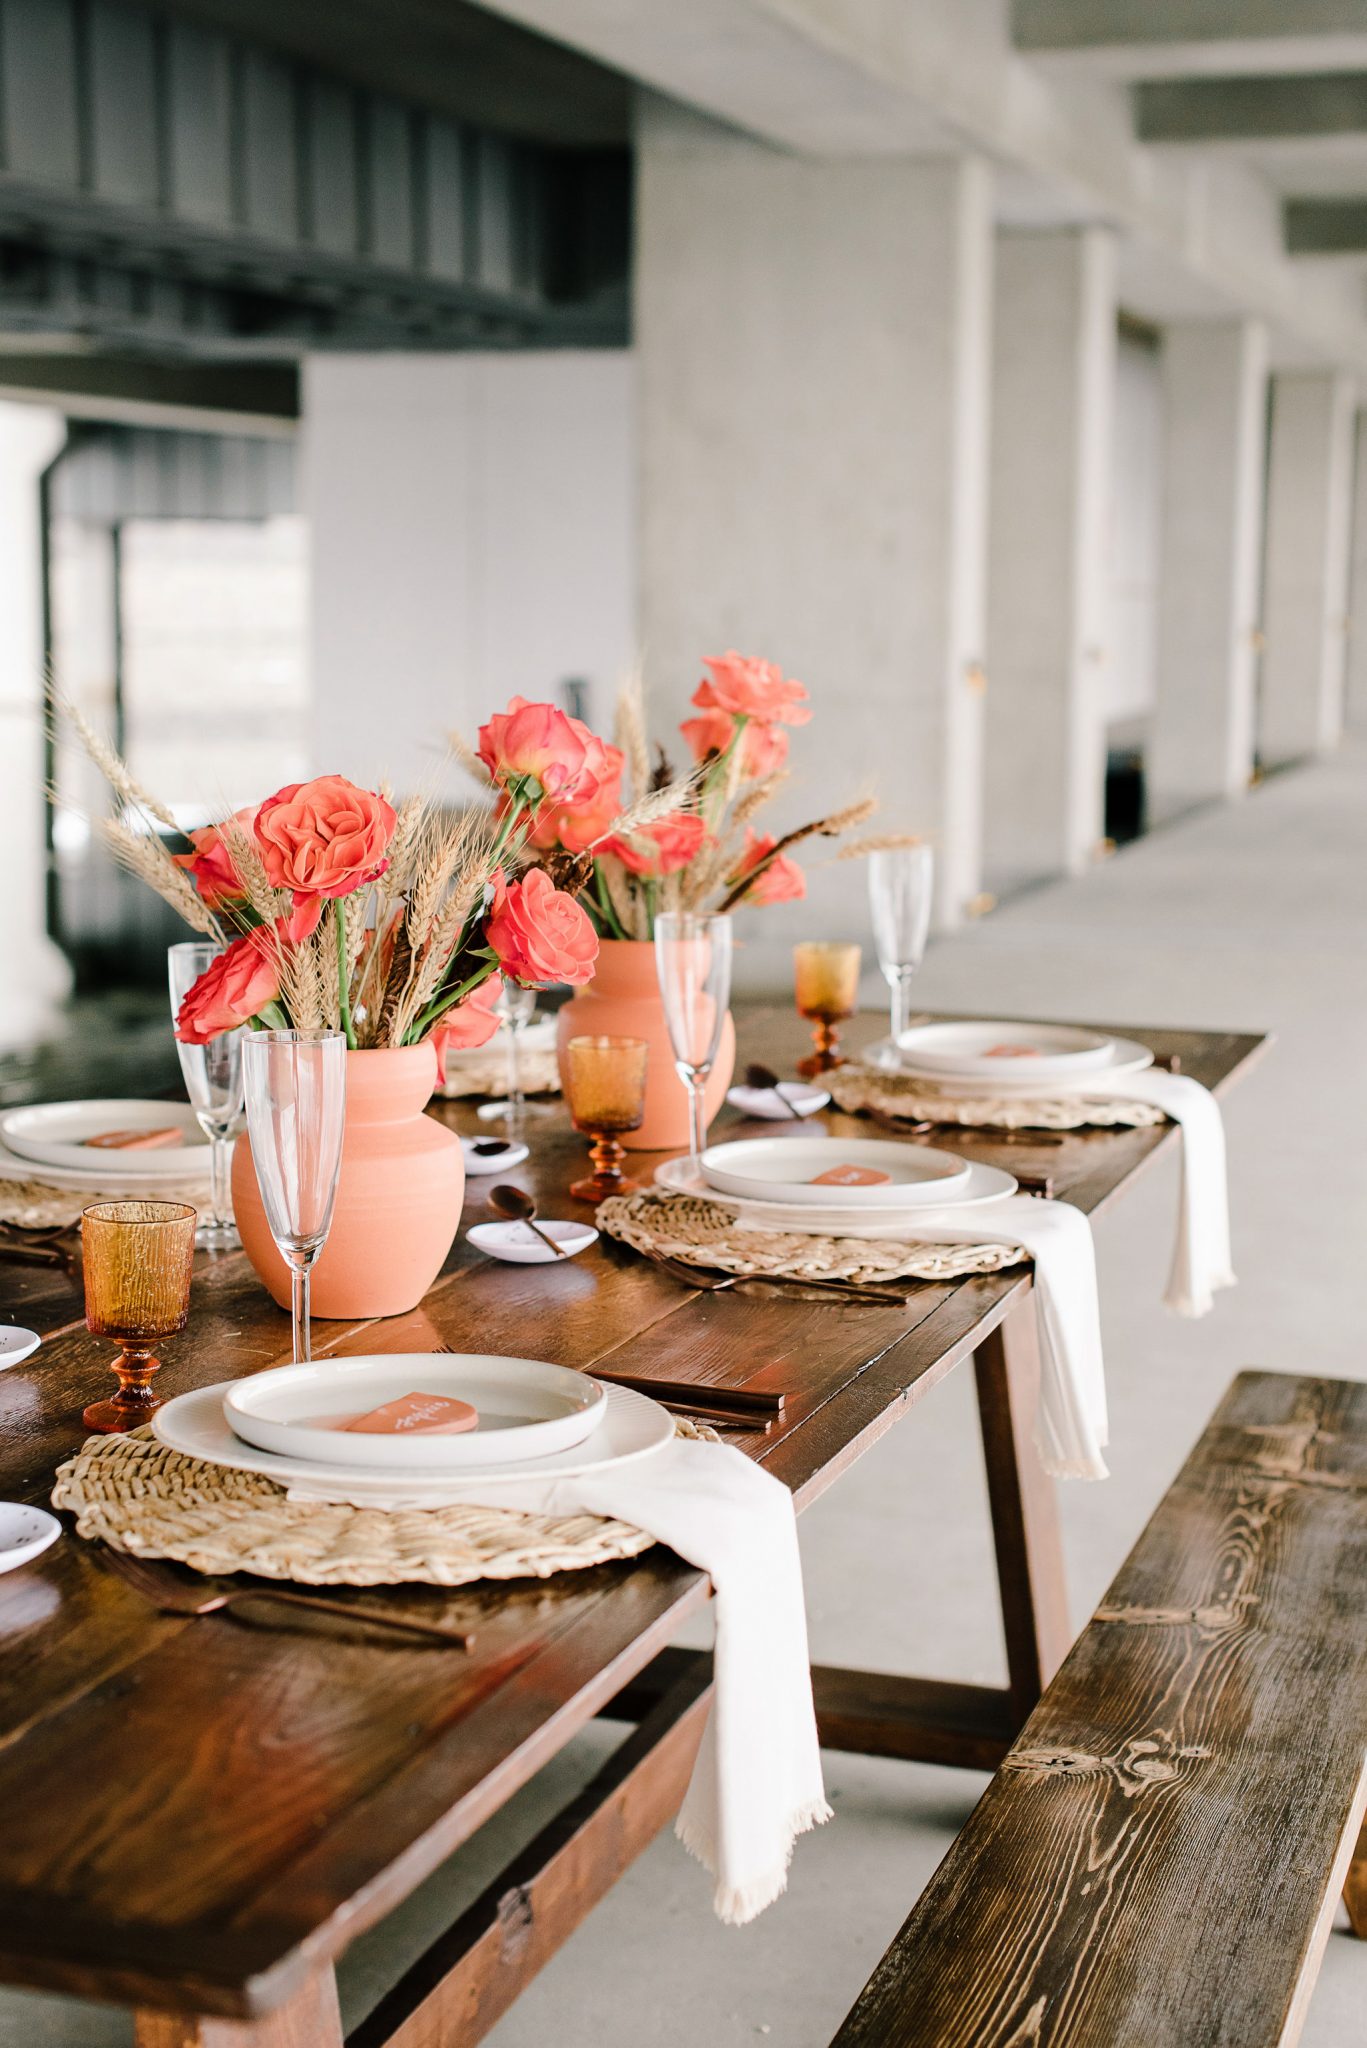 Tablescape Inspiration - Wedding Table Design Ideas on The Bronte Bride Blog